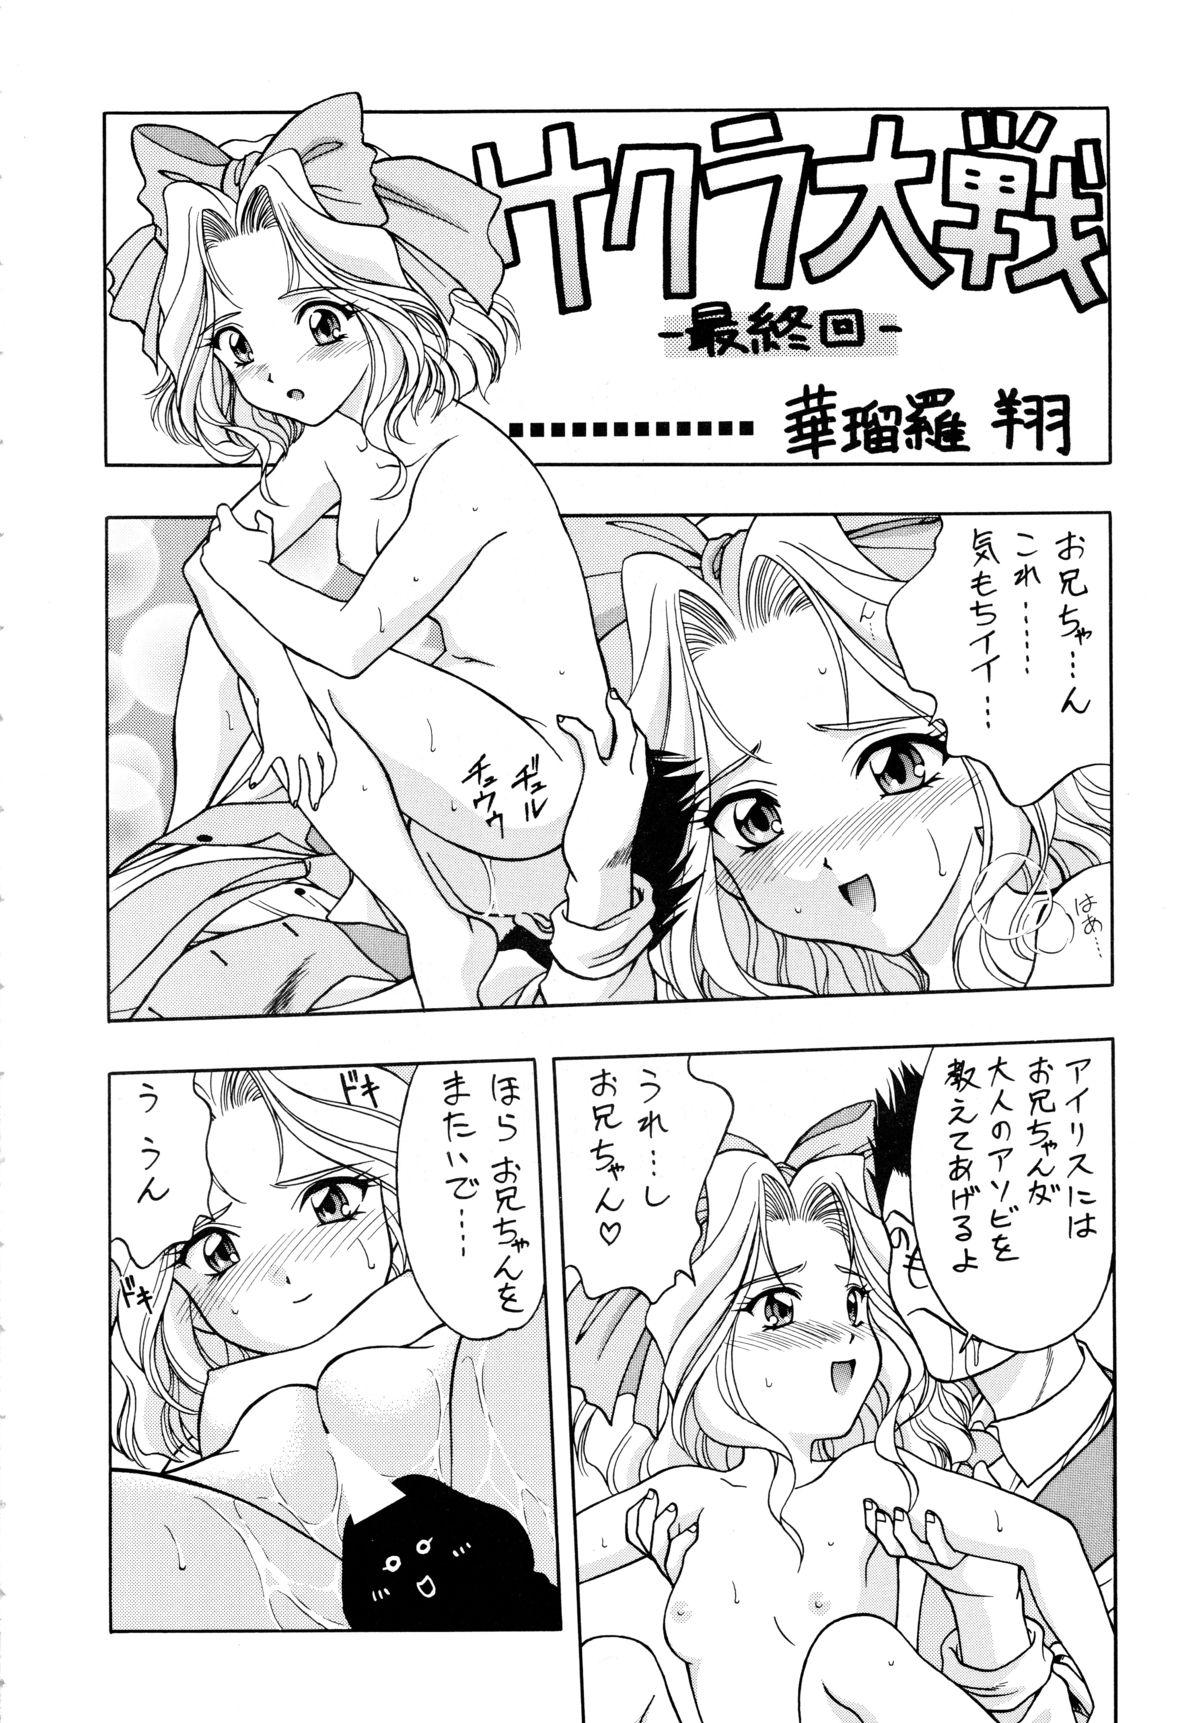 Clit LOVE² BREATH - Sakura taisen Martian successor nadesico Tokimeki memorial Youre under arrest Deflowered - Page 4